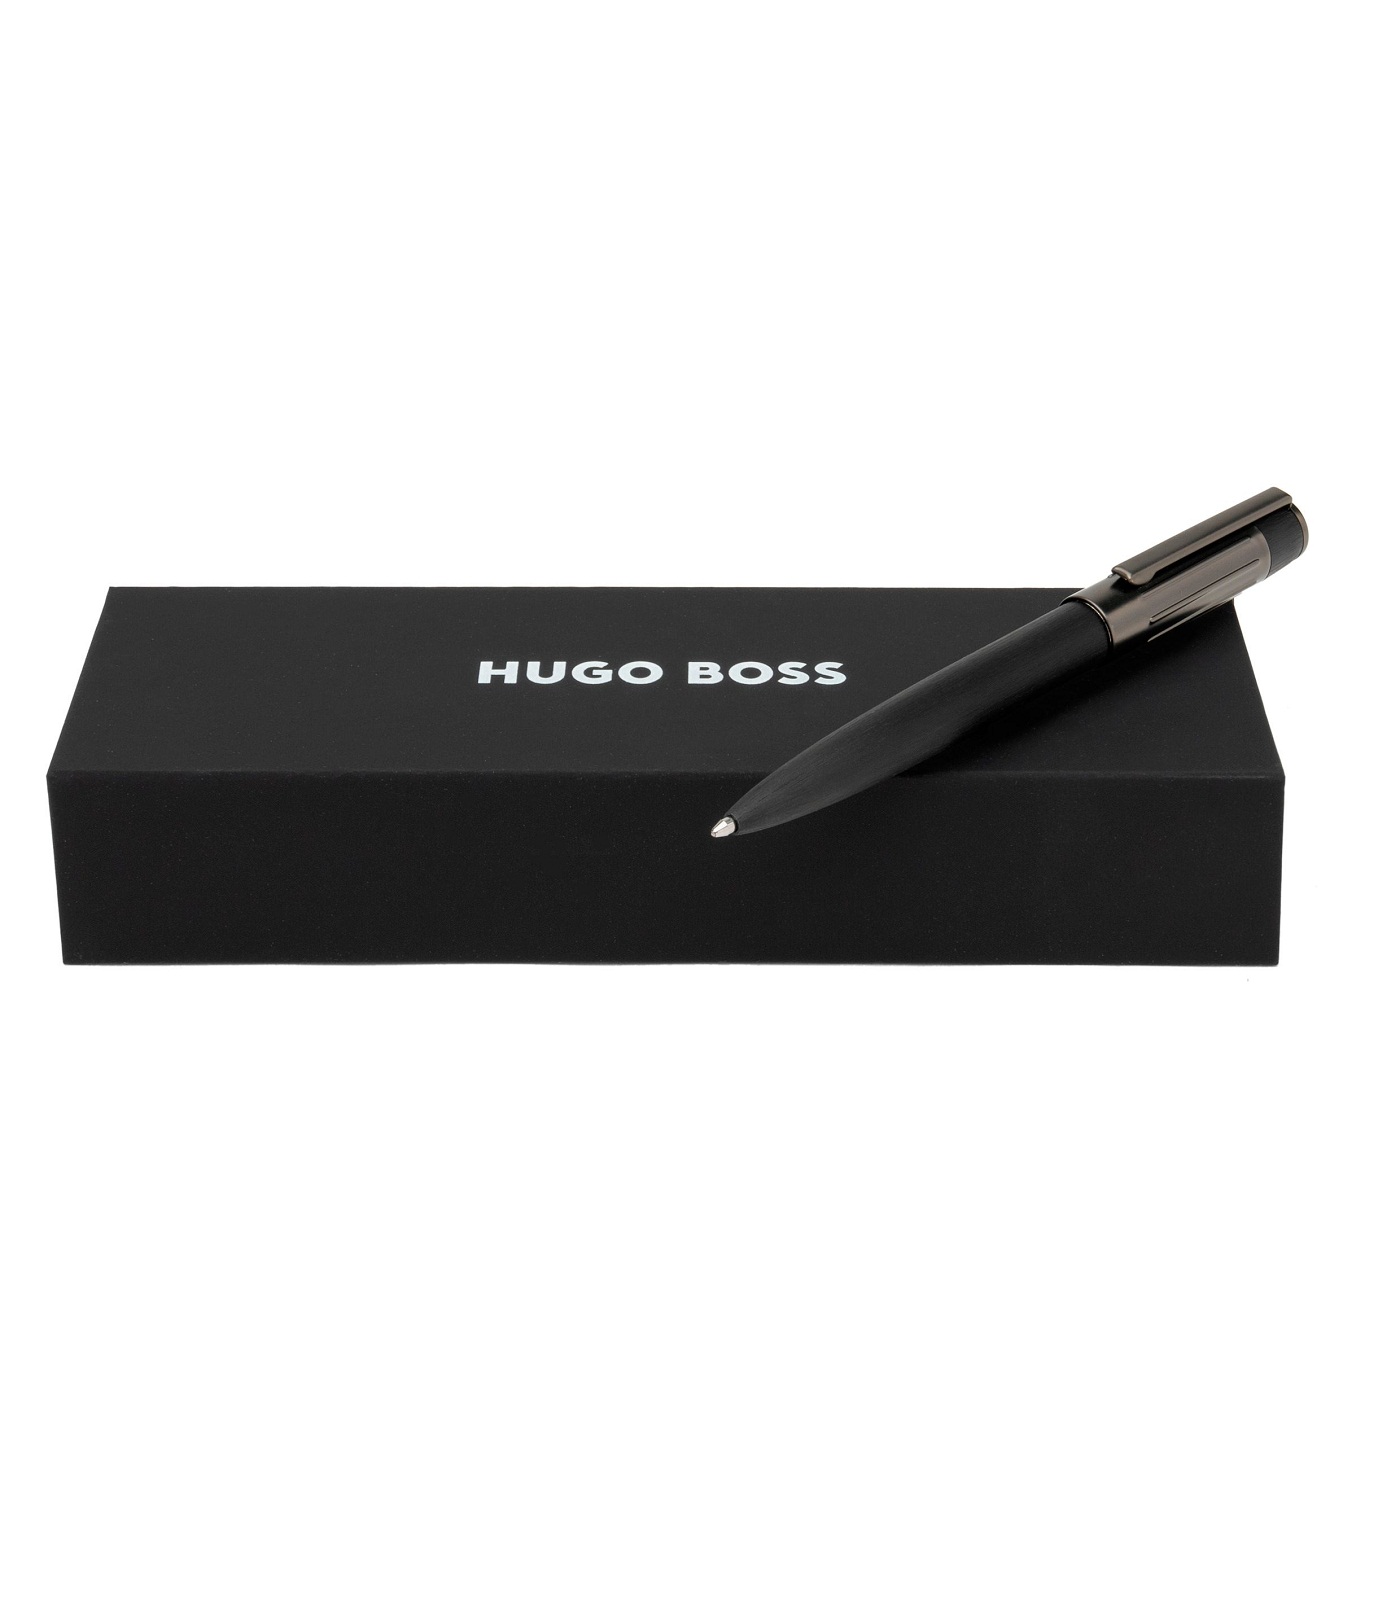 HUGO BOSS Ballpoint pen Gear Ribs Black - Stationery | Office Supplies ...